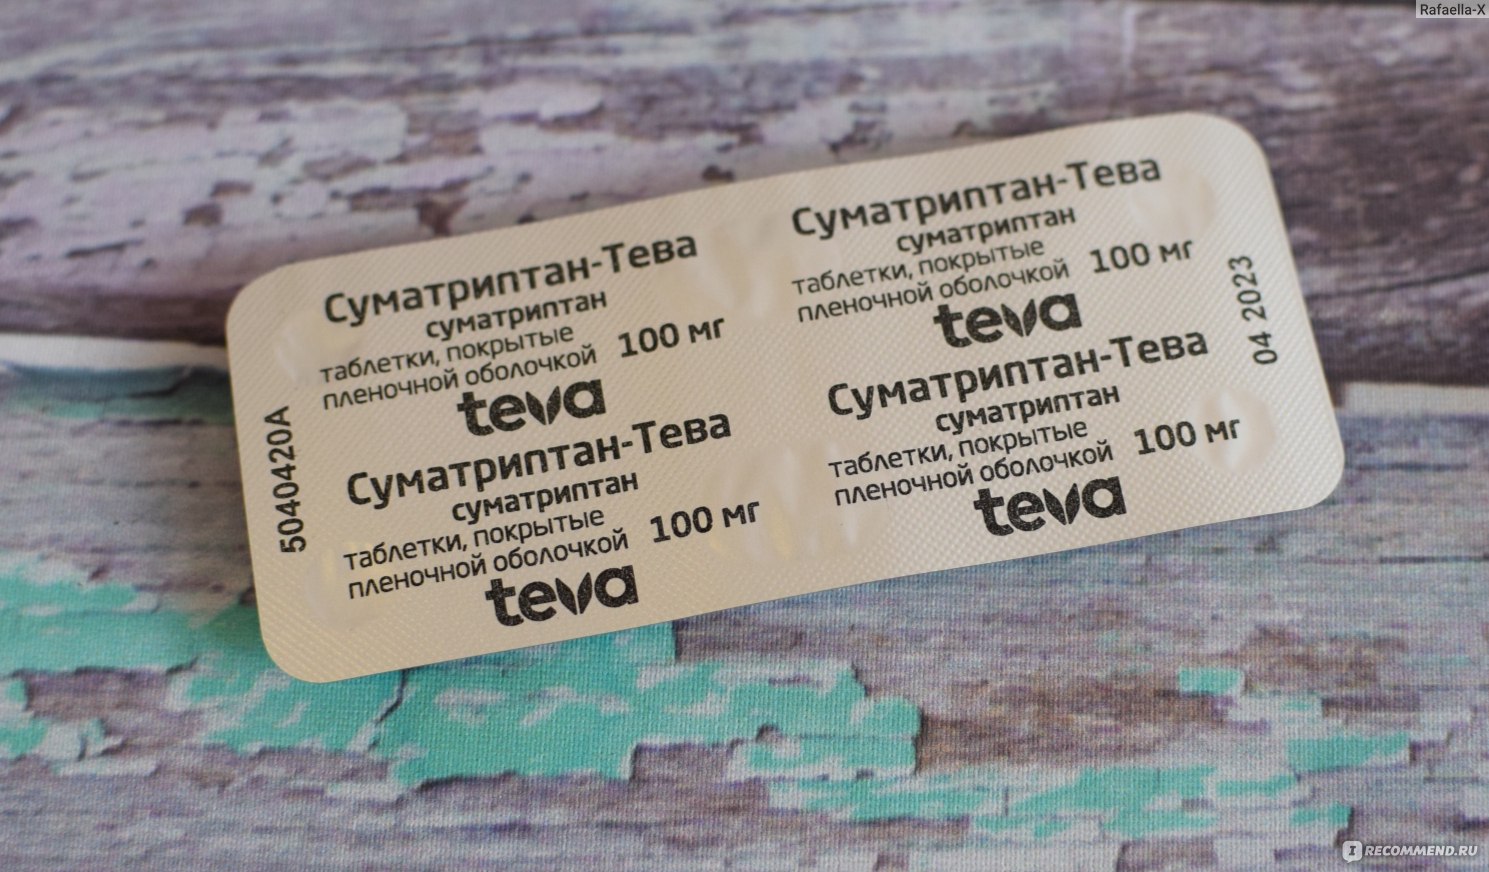 Противомигренозное средство TeVa Суматриптан-Тева 100 мг - «Эти .